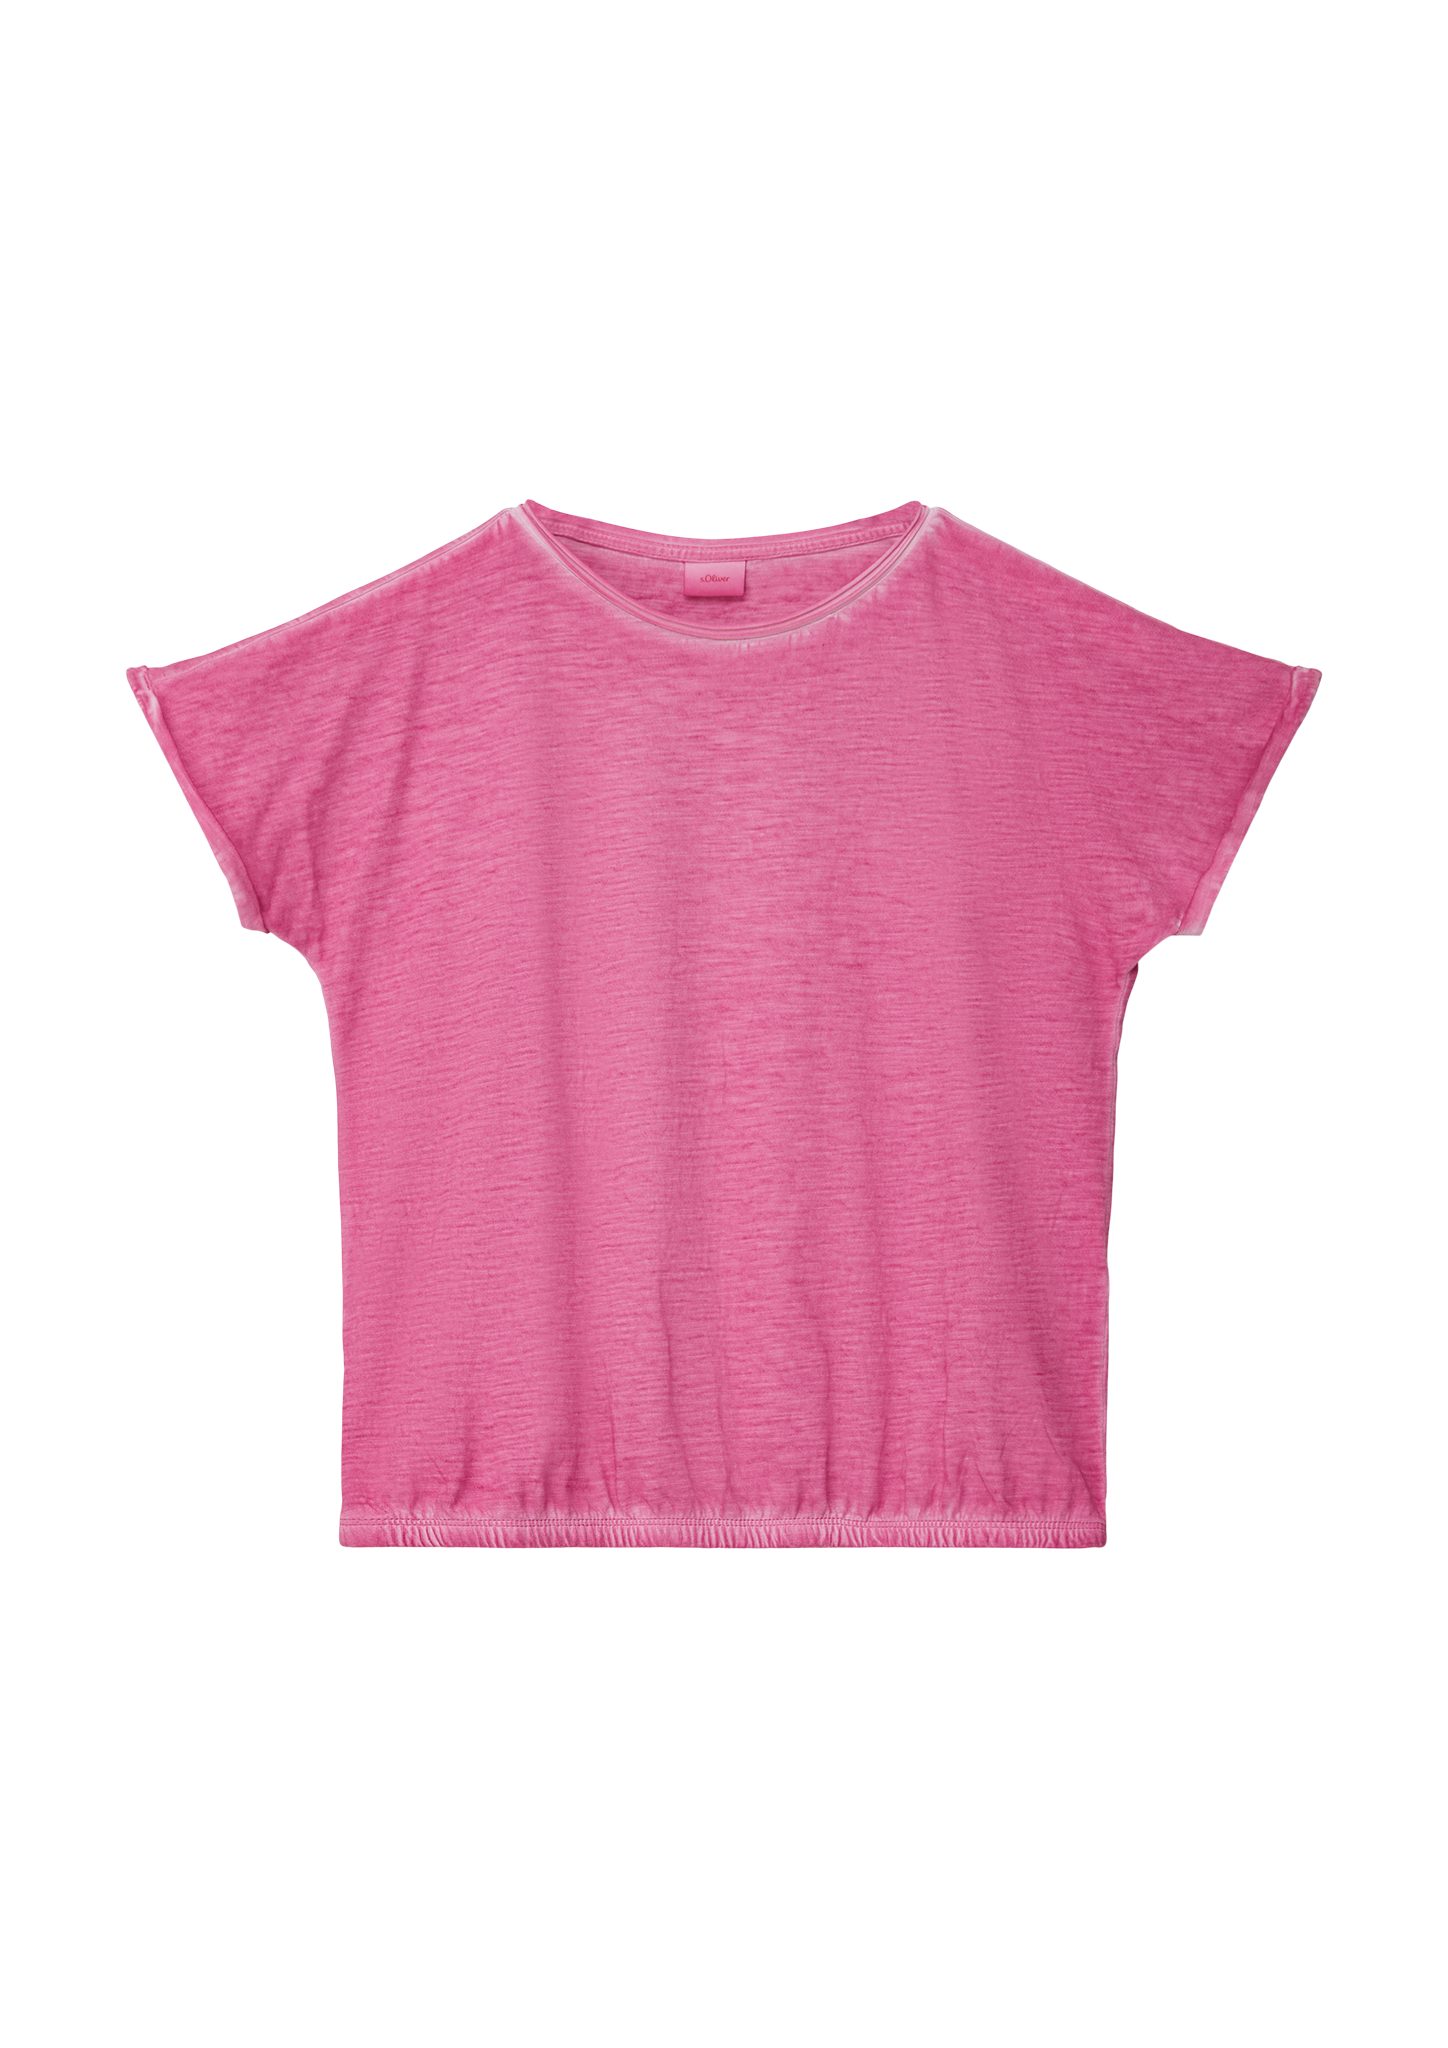 T-Shirt aus Kurzarmshirt Baumwolle pink s.Oliver